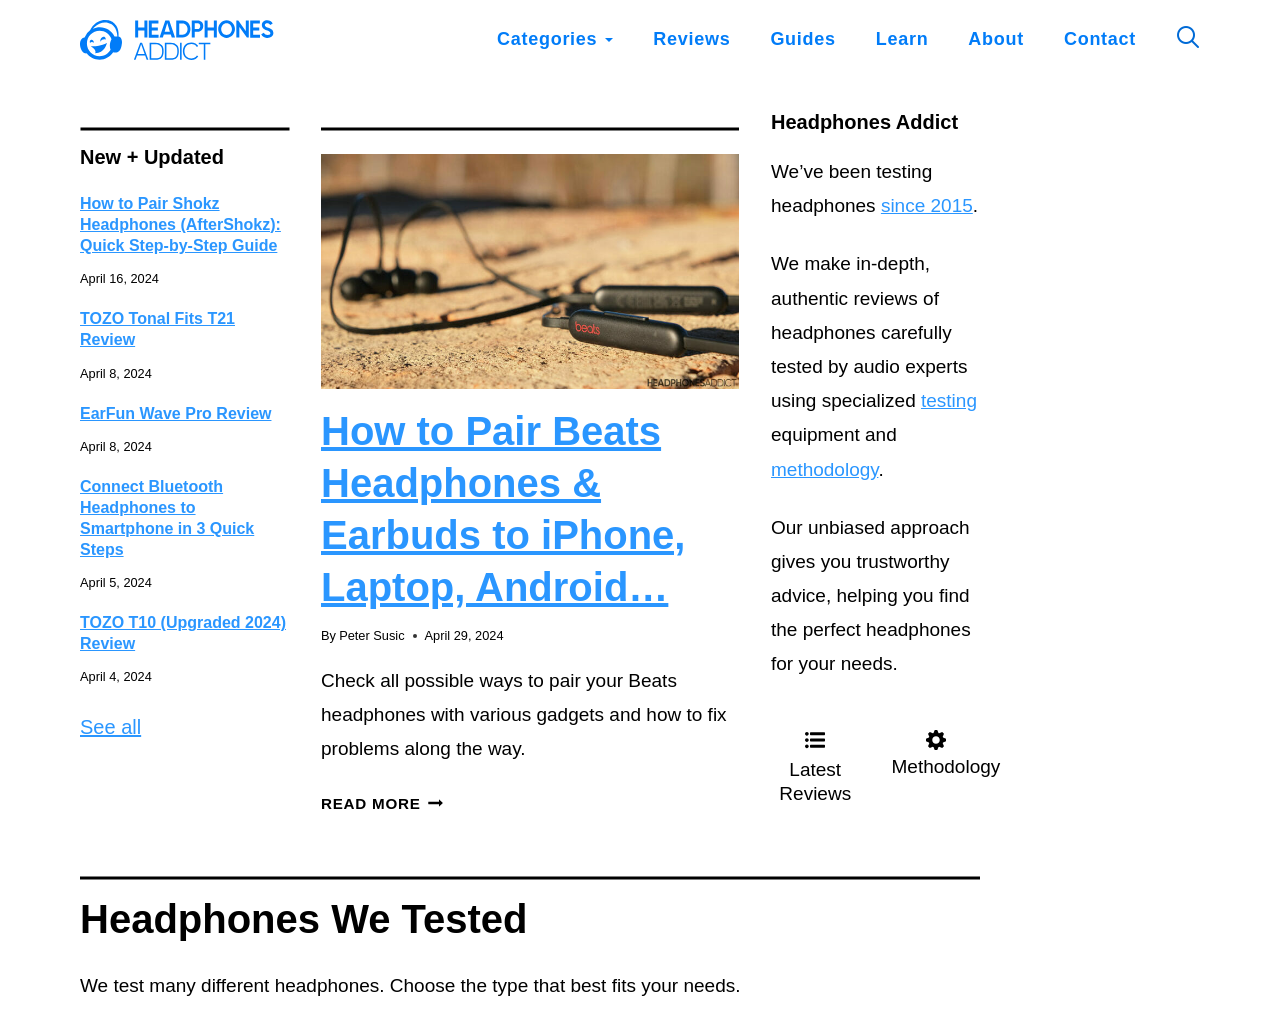 headphonesaddict.com